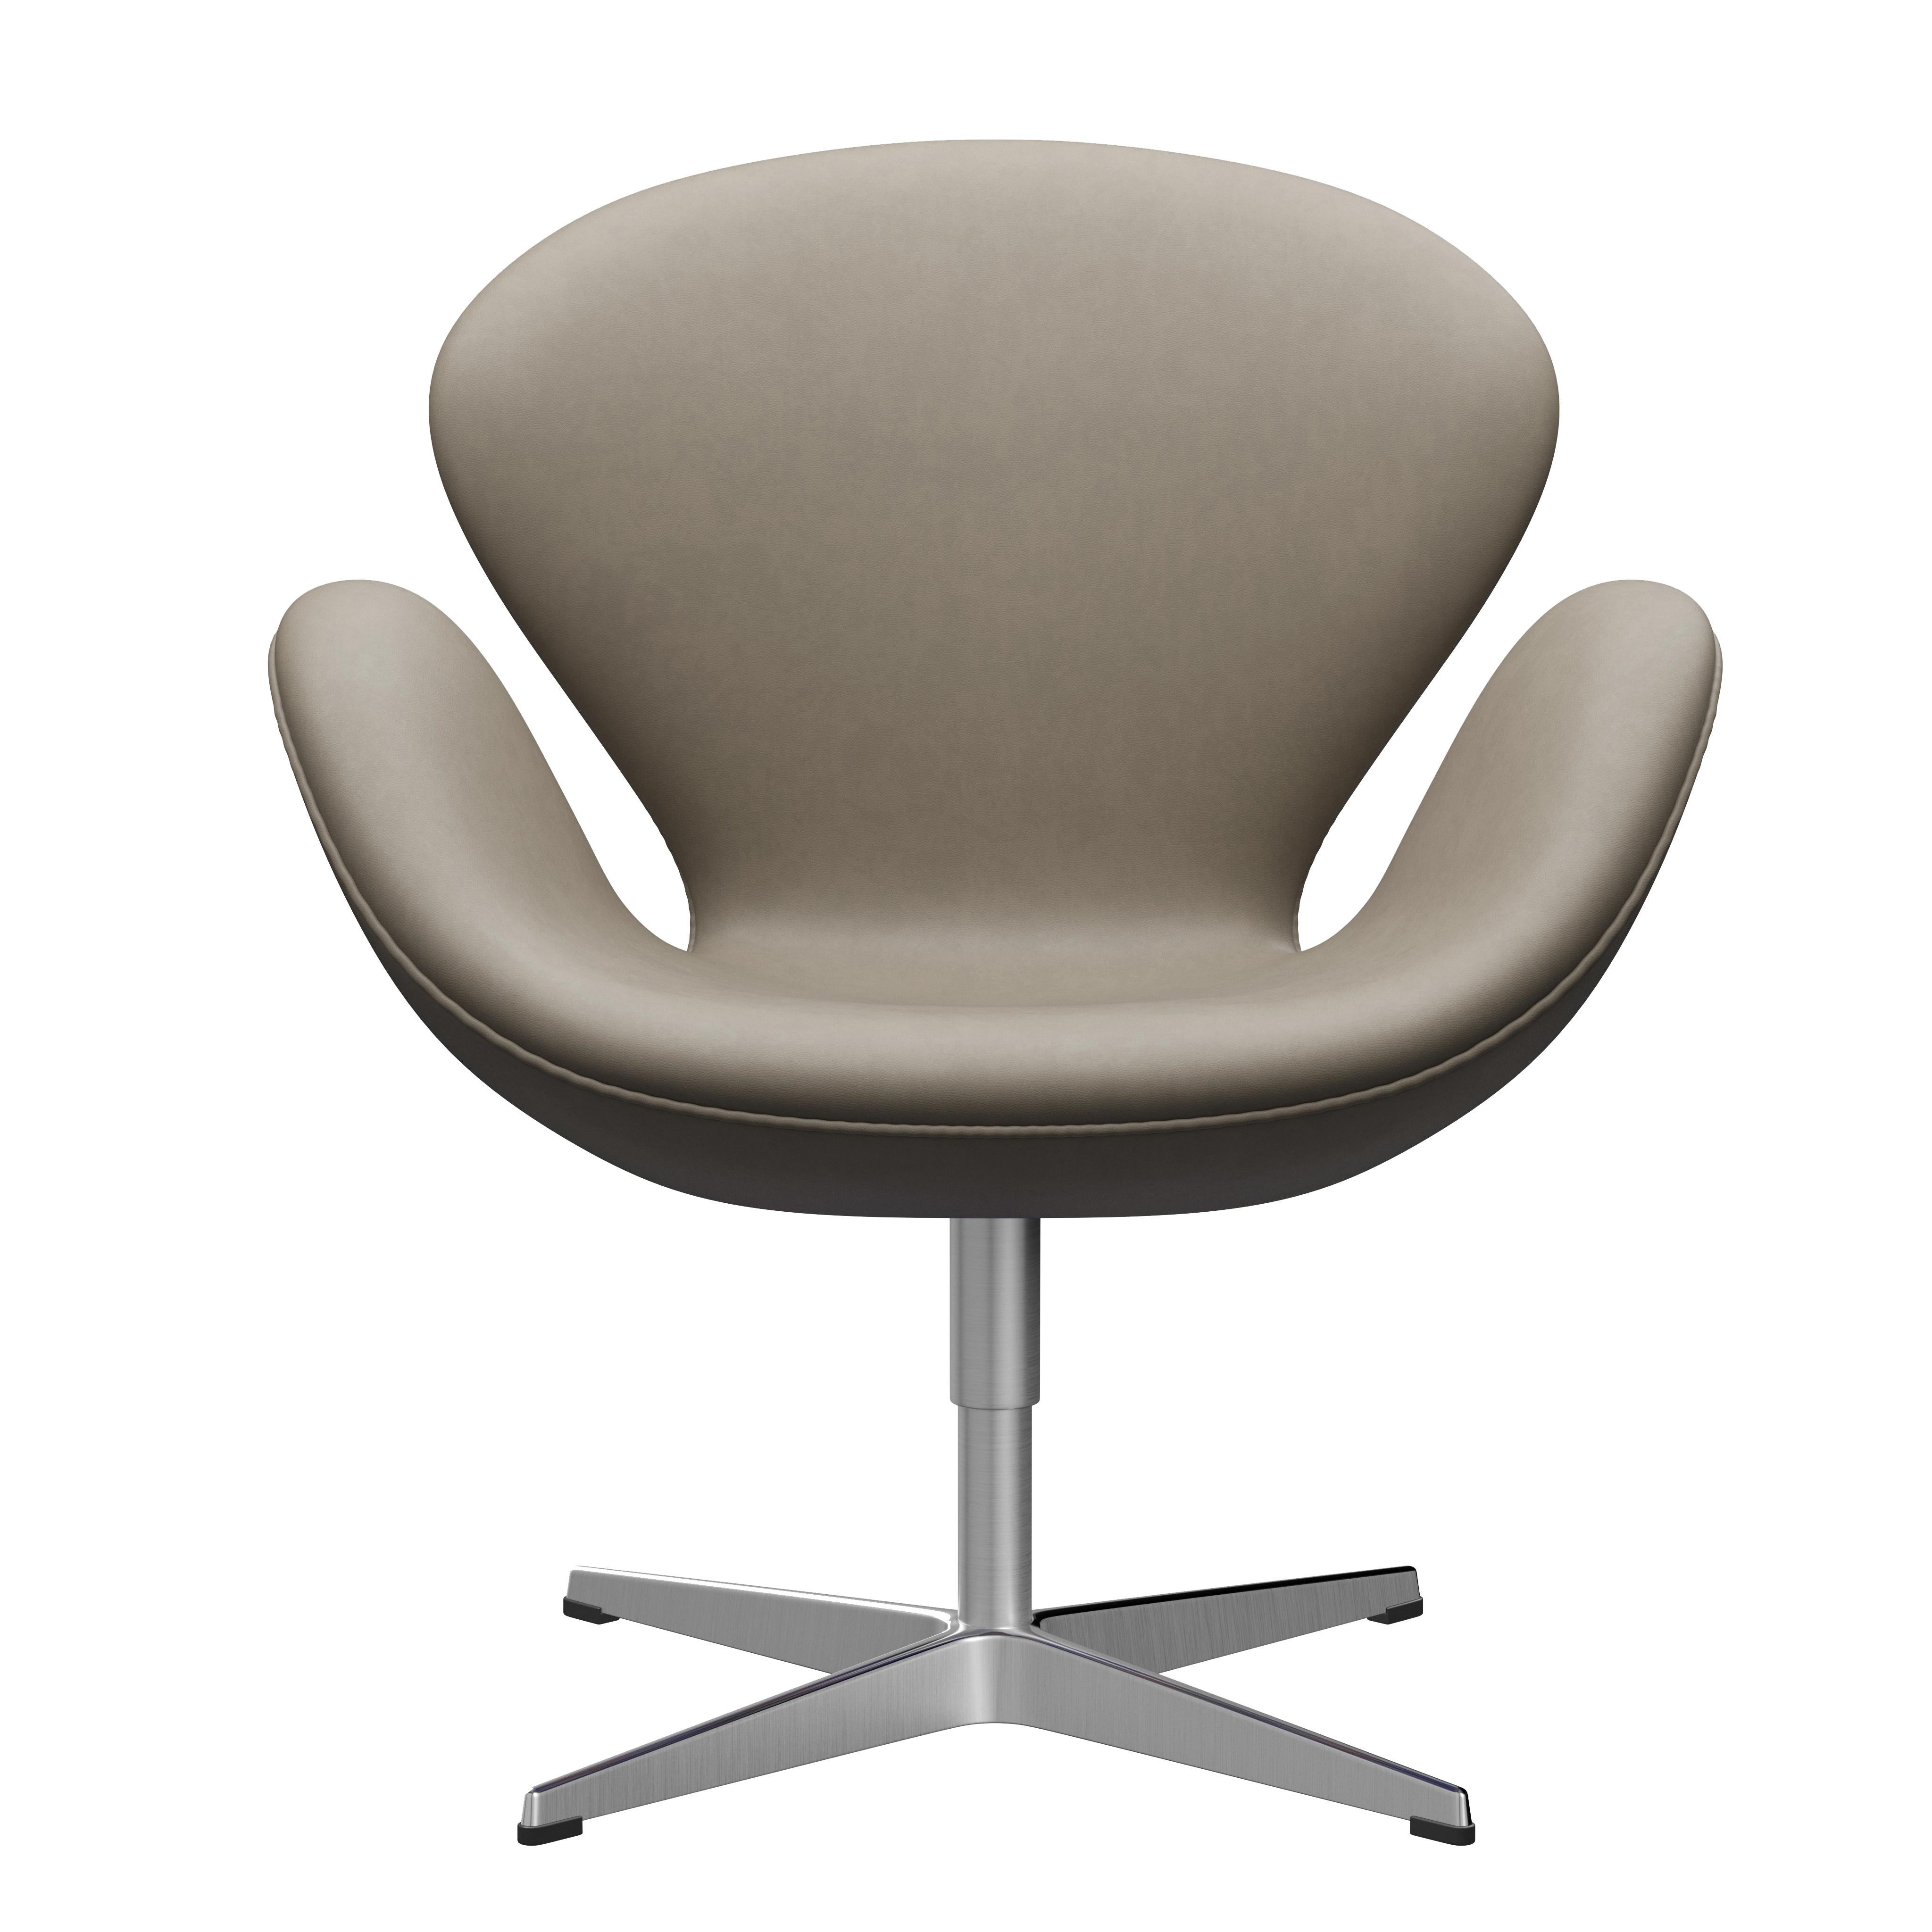 Arne Jacobsen 'Swan' Chair for Fritz Hansen in Leather Upholstery (Cat. 3) For Sale 9